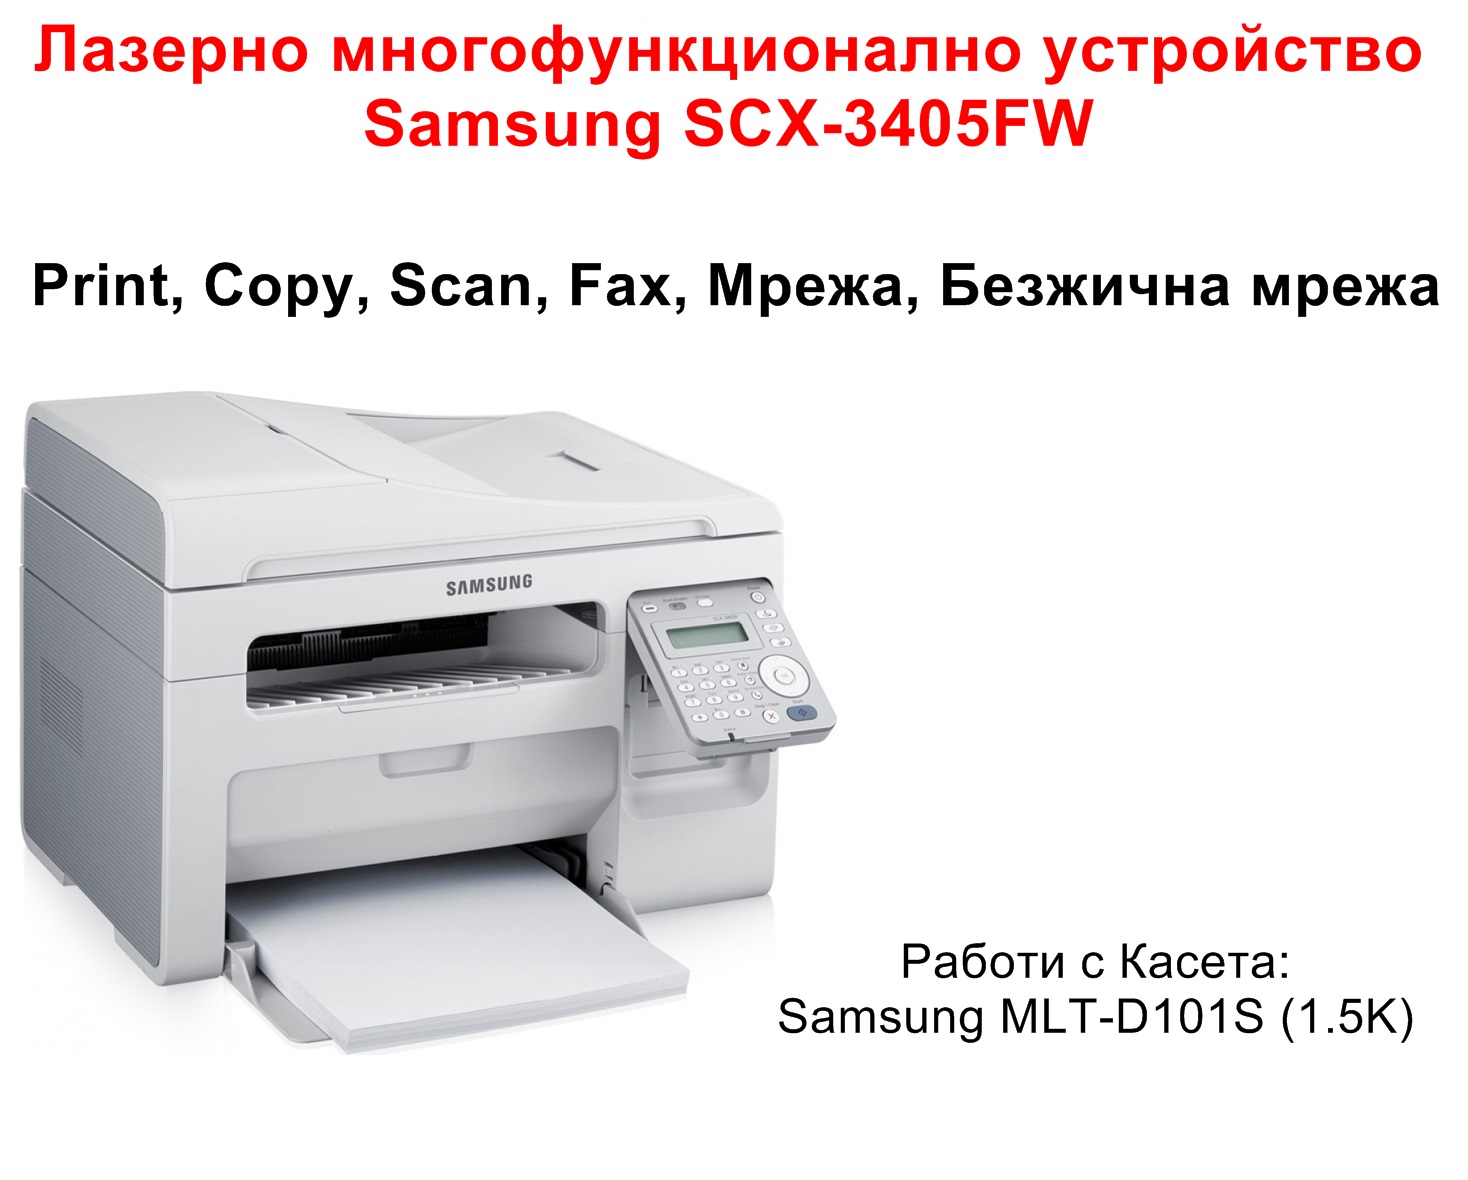 All-in-One Printer Samsung SCX-3405FW